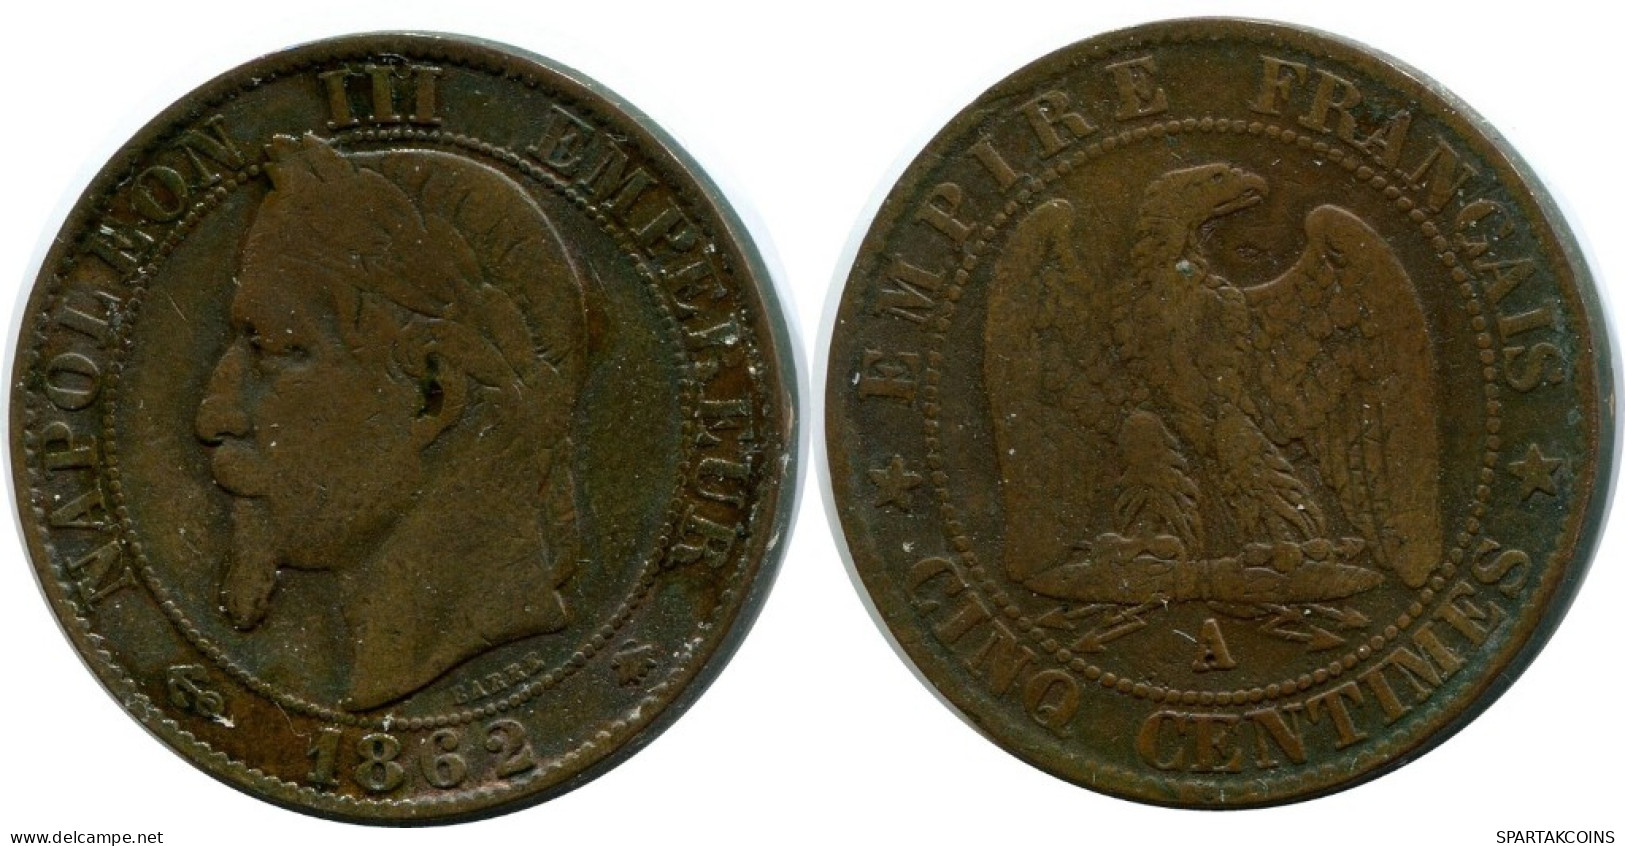 5 CENTIMES 1862 A FRANKREICH FRANCE Napoleon III Französisch Münze #AM949.D.A - 5 Centimes